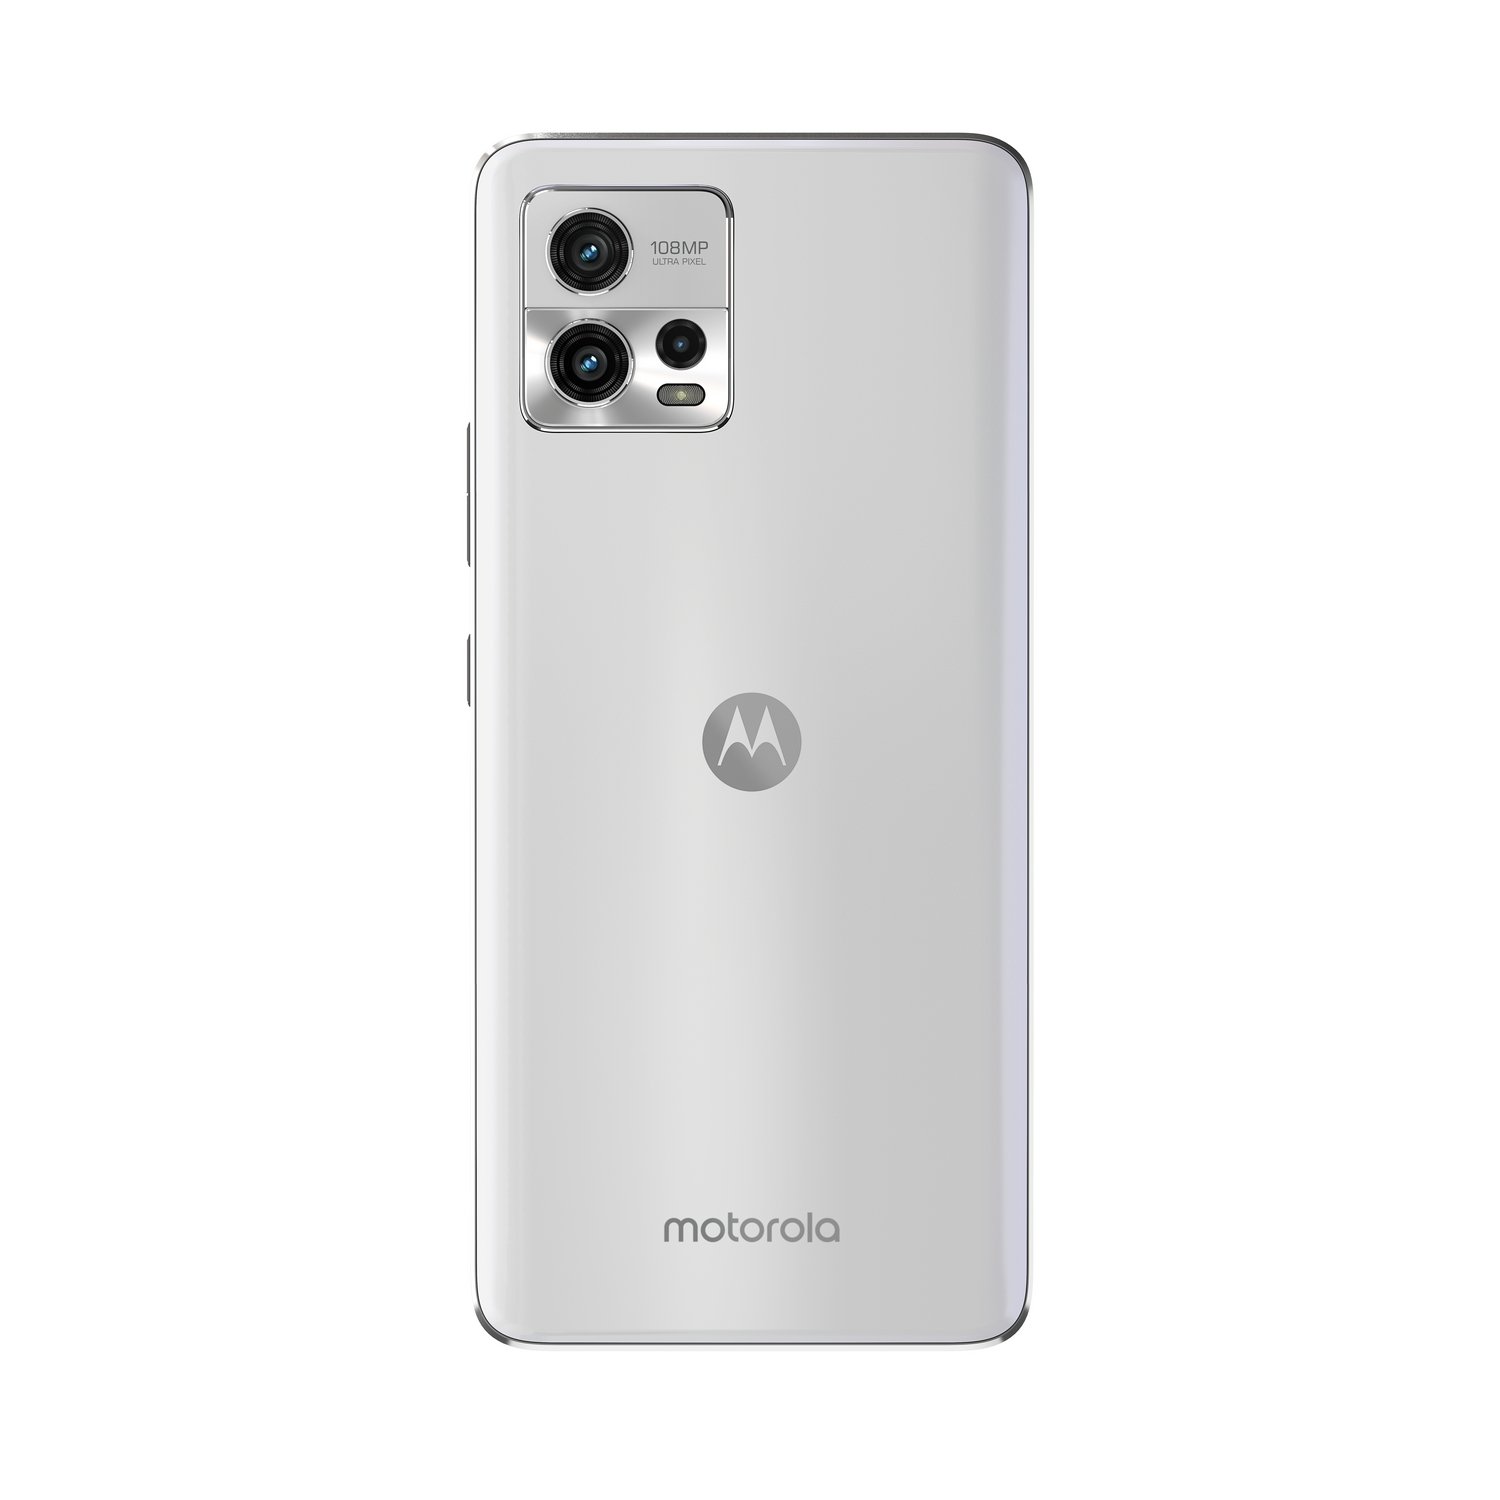 Motorola Moto G72 Test